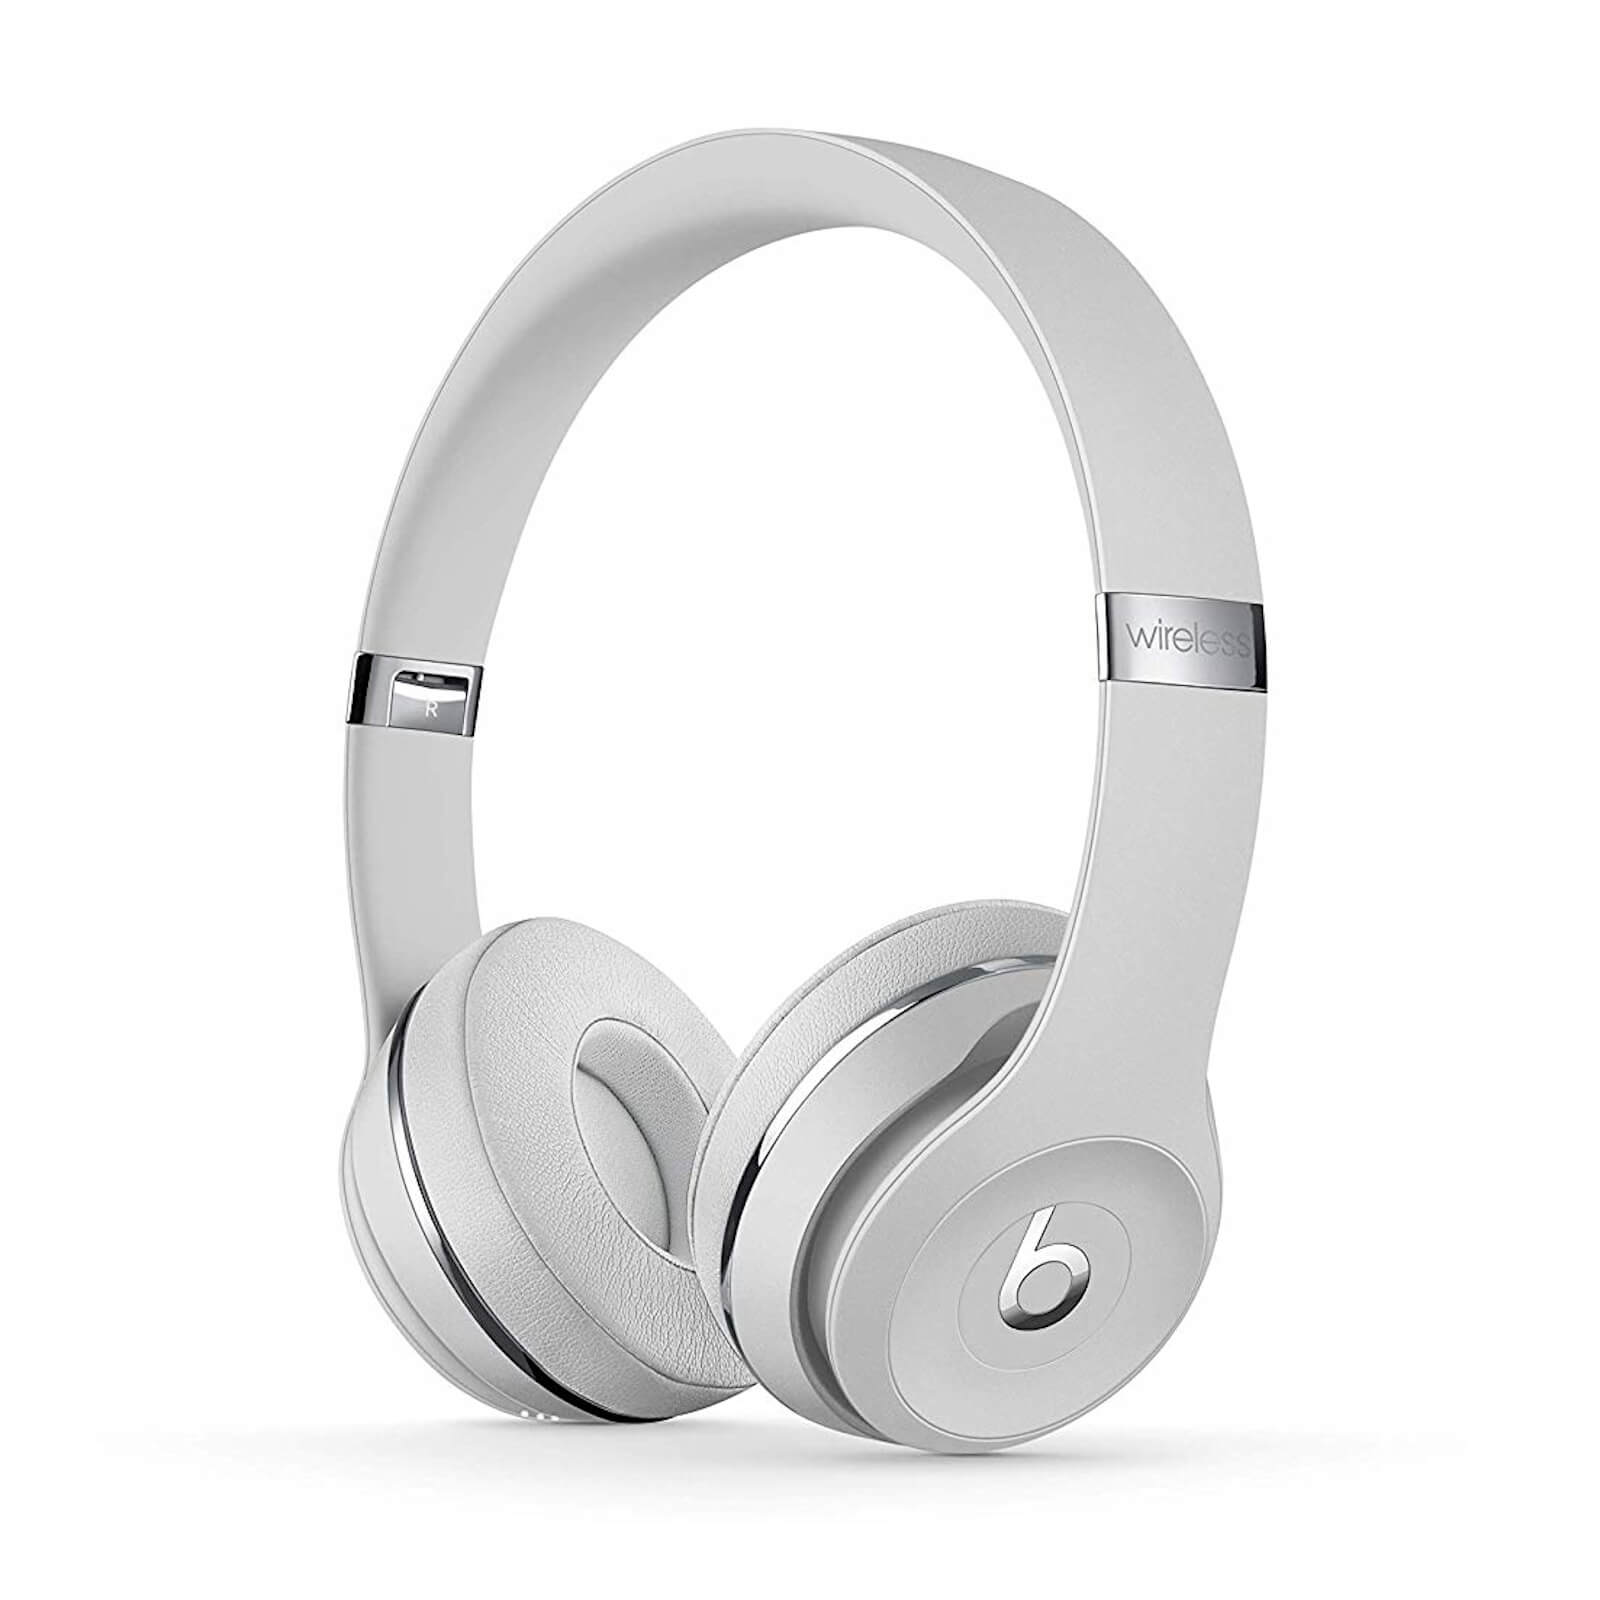 Beats By Dr. Dre Solo 3 Wireless On-Ear Headphones - Satin Silver